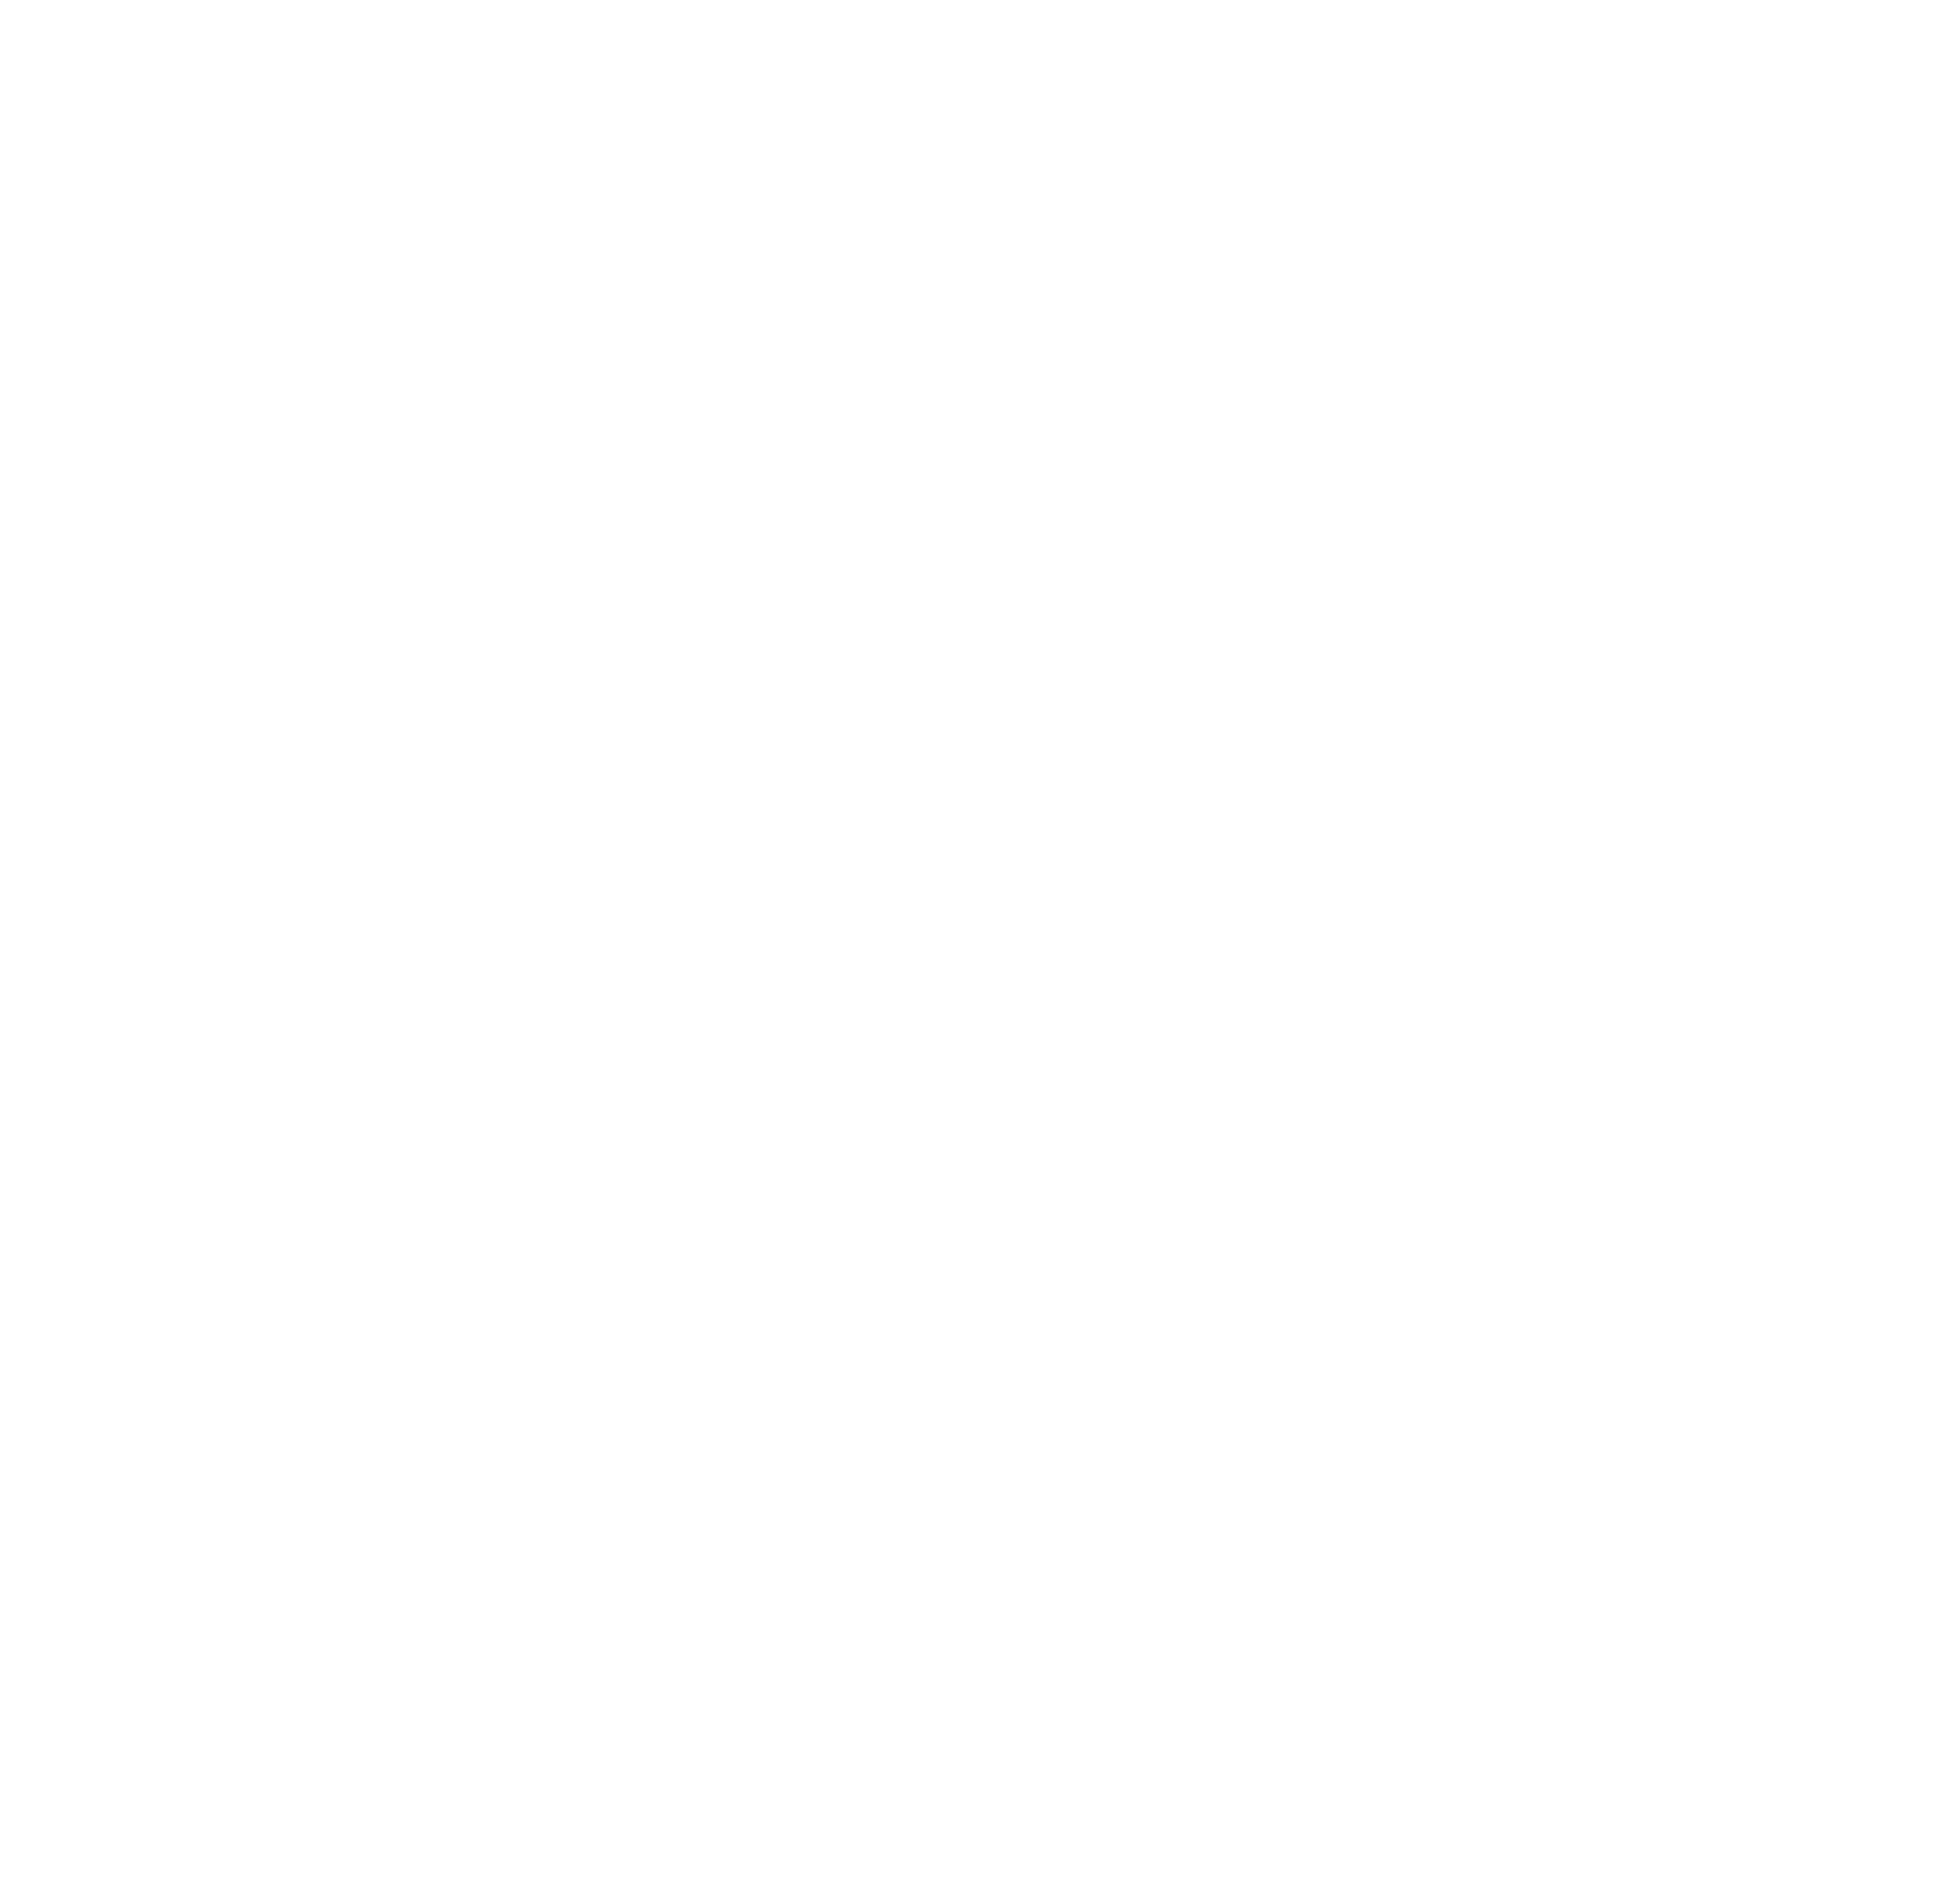 Last Call Liquor